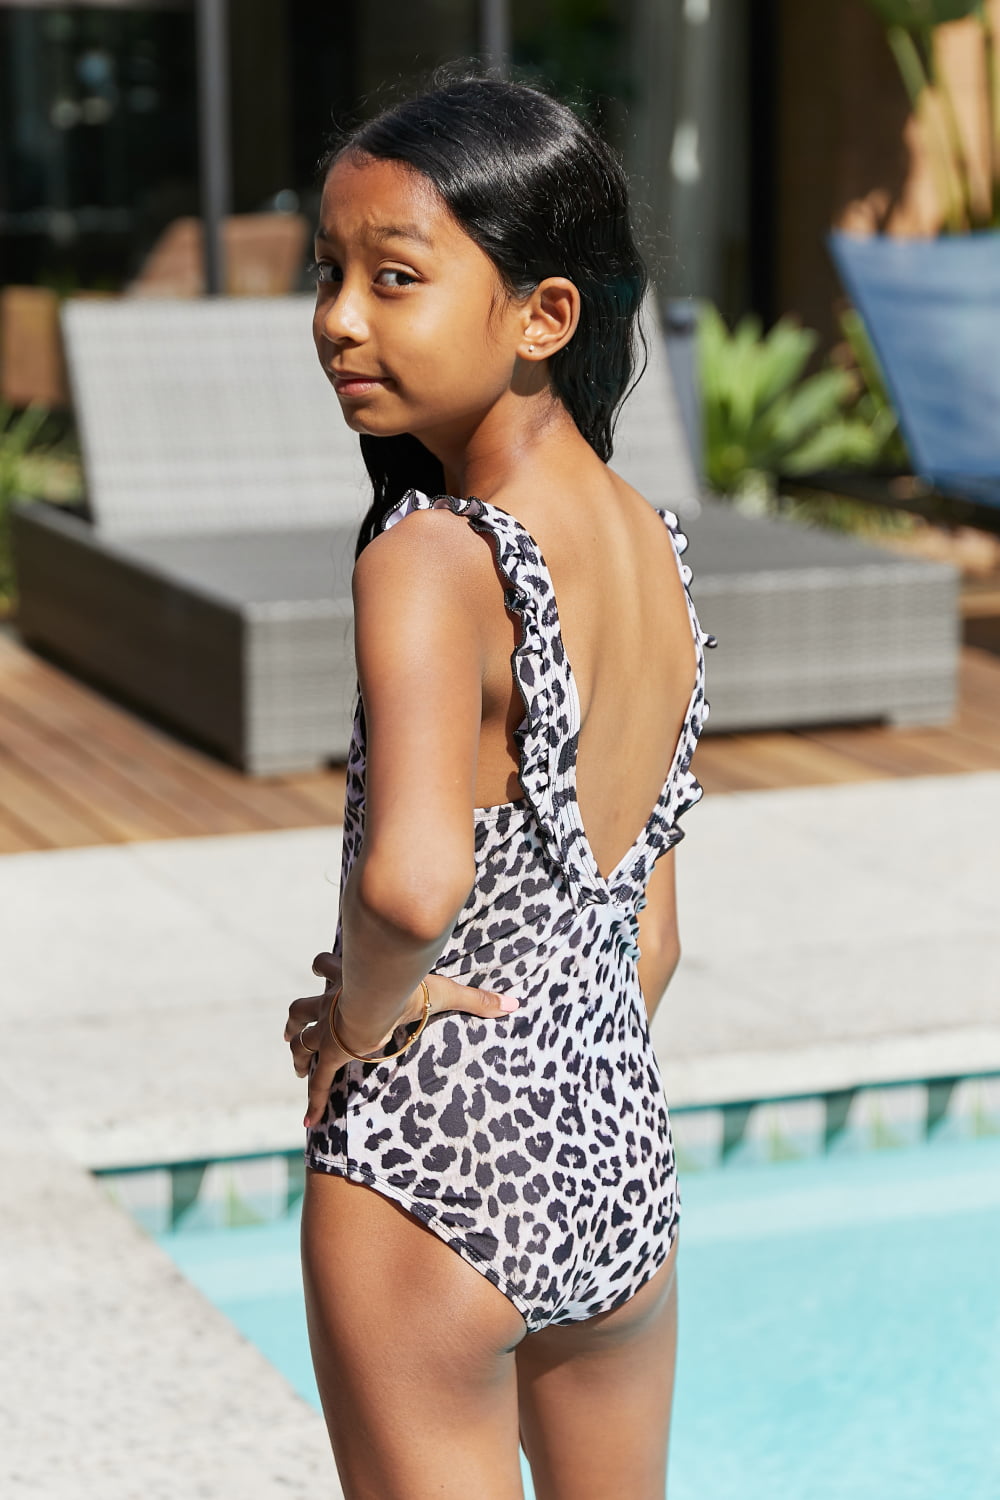 Marina West Swim High Tide One-Piece in Multi Palms Mother Daughter Swimwear